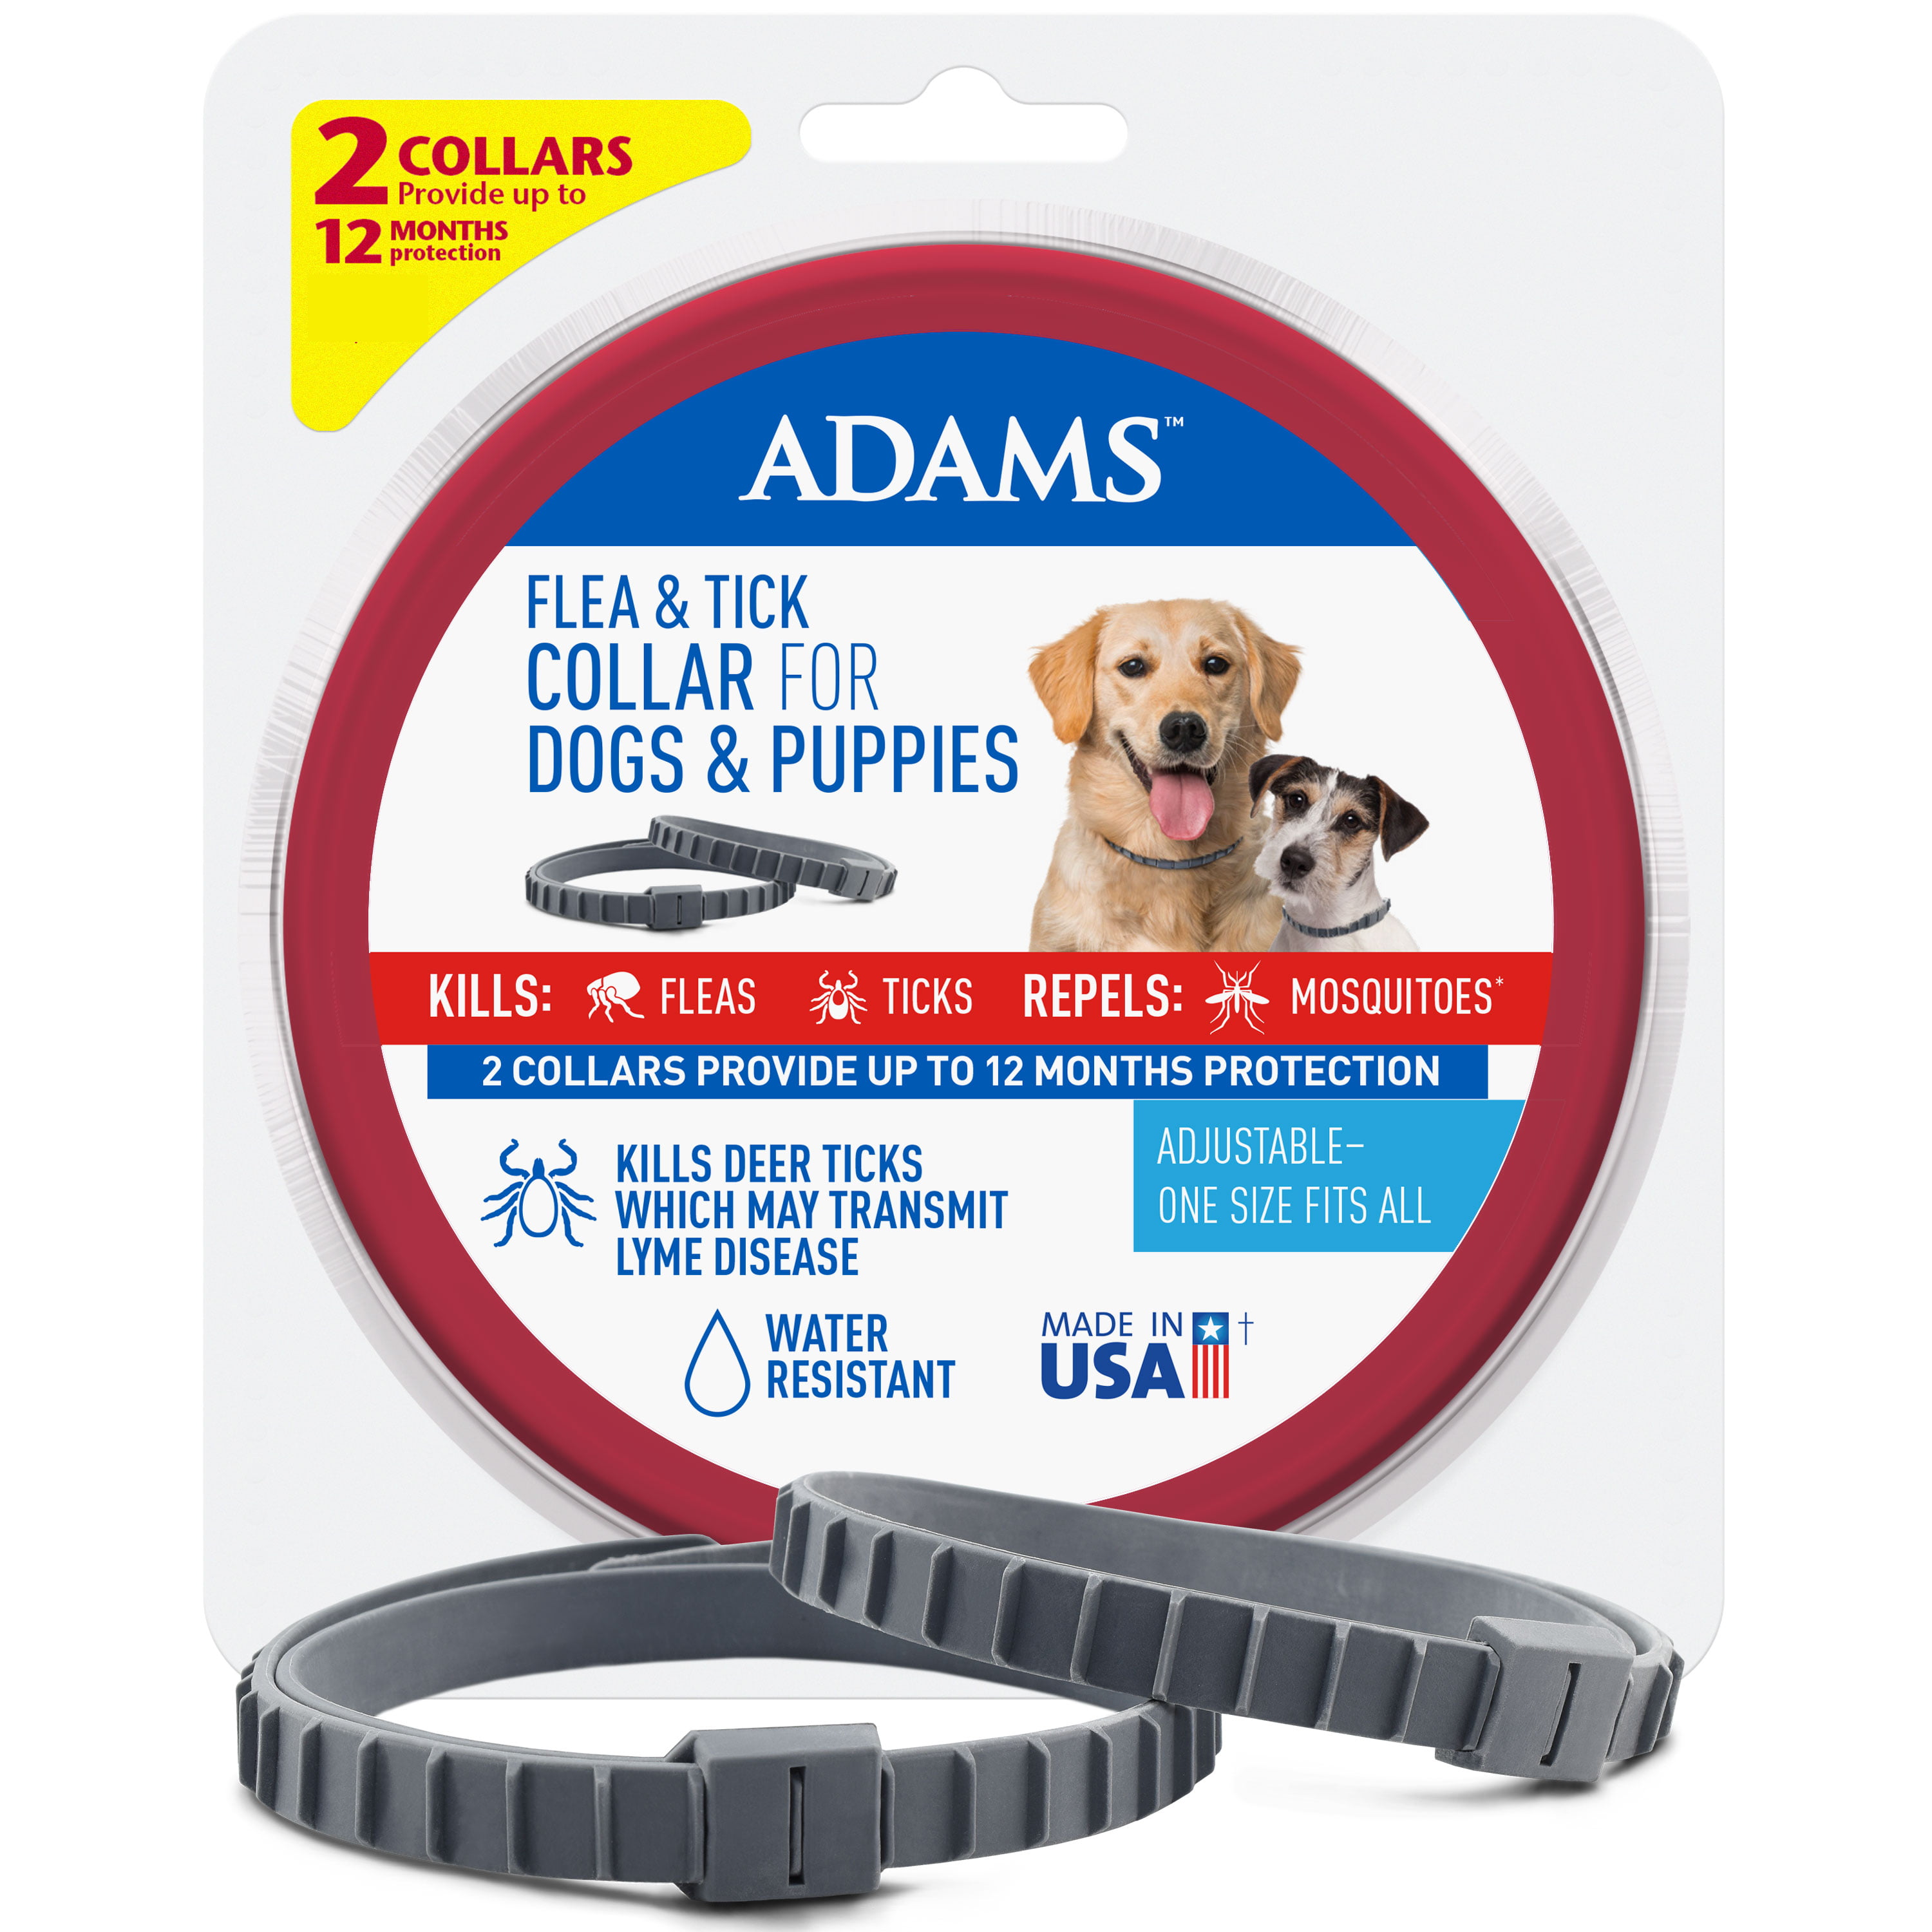 walmart pet supplies for dogs